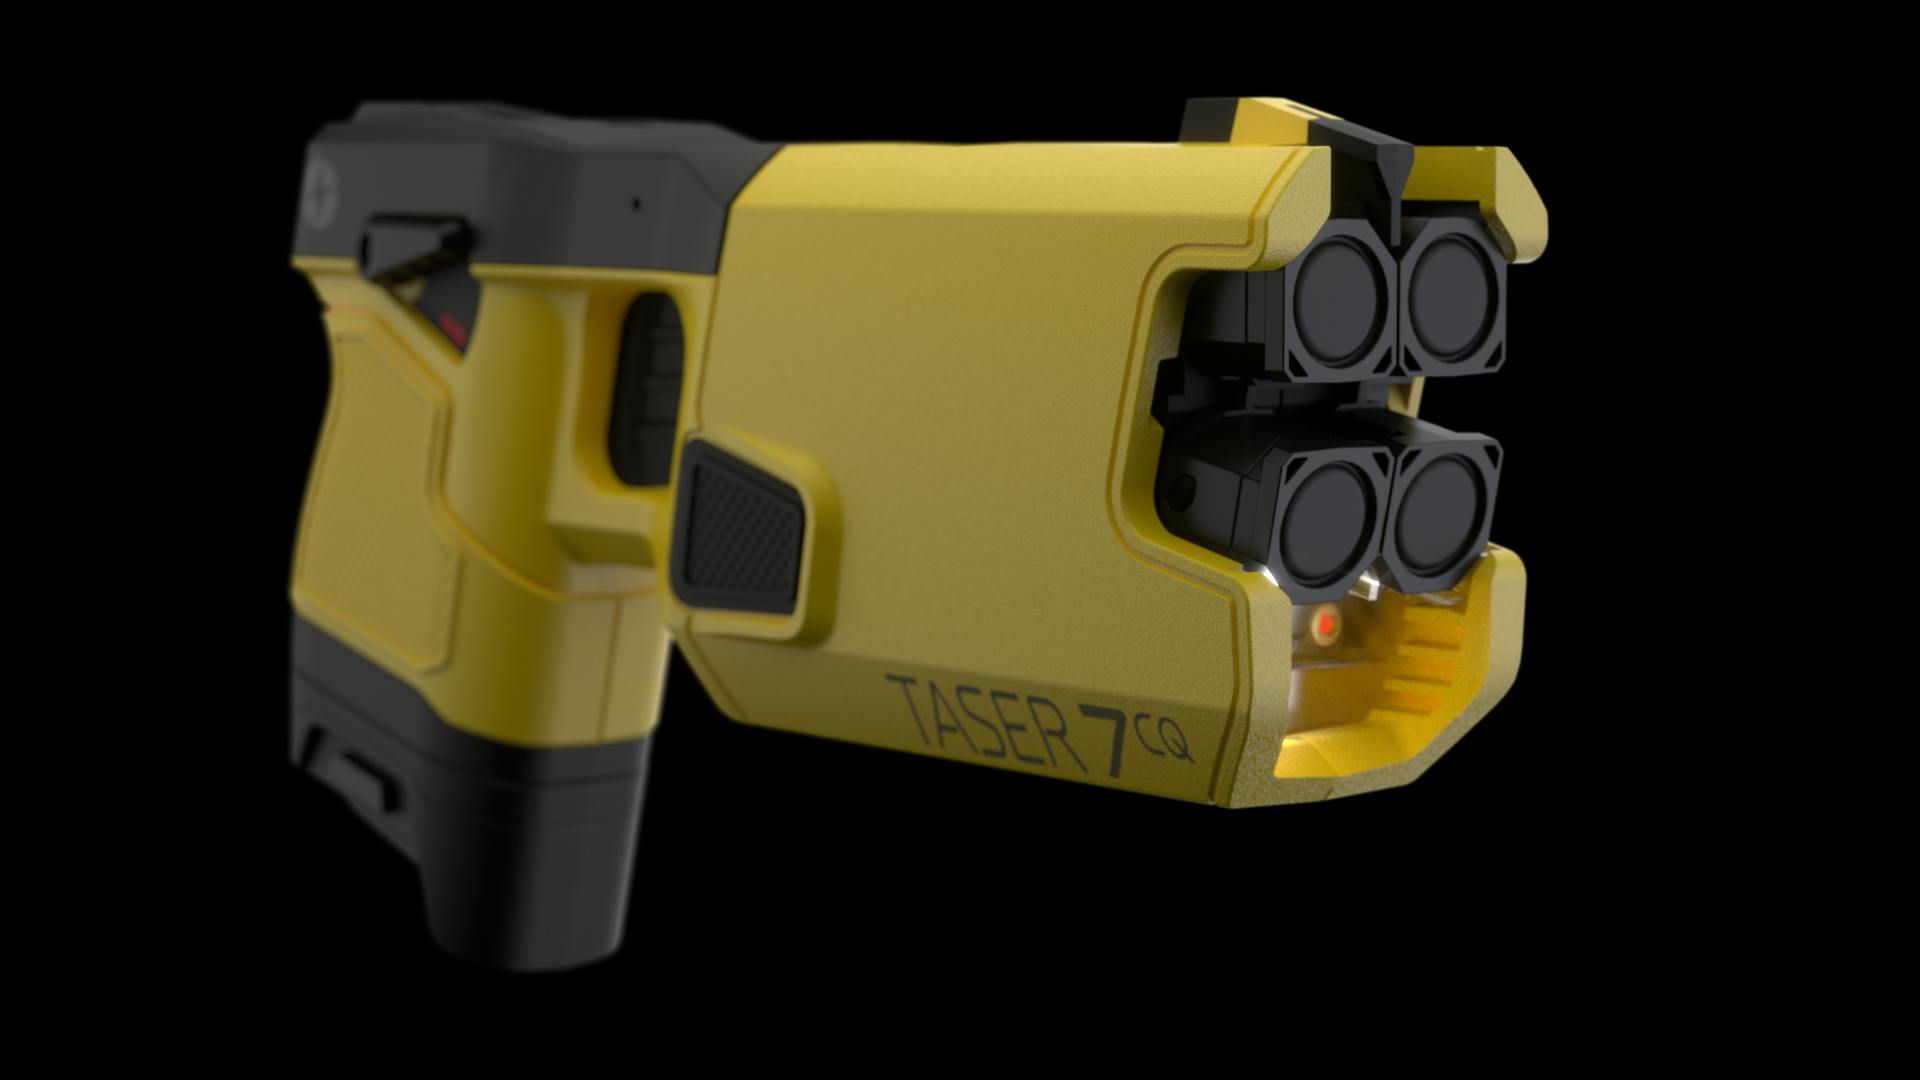 TASER 7 CQ, The Ultimate Home Defense Gun